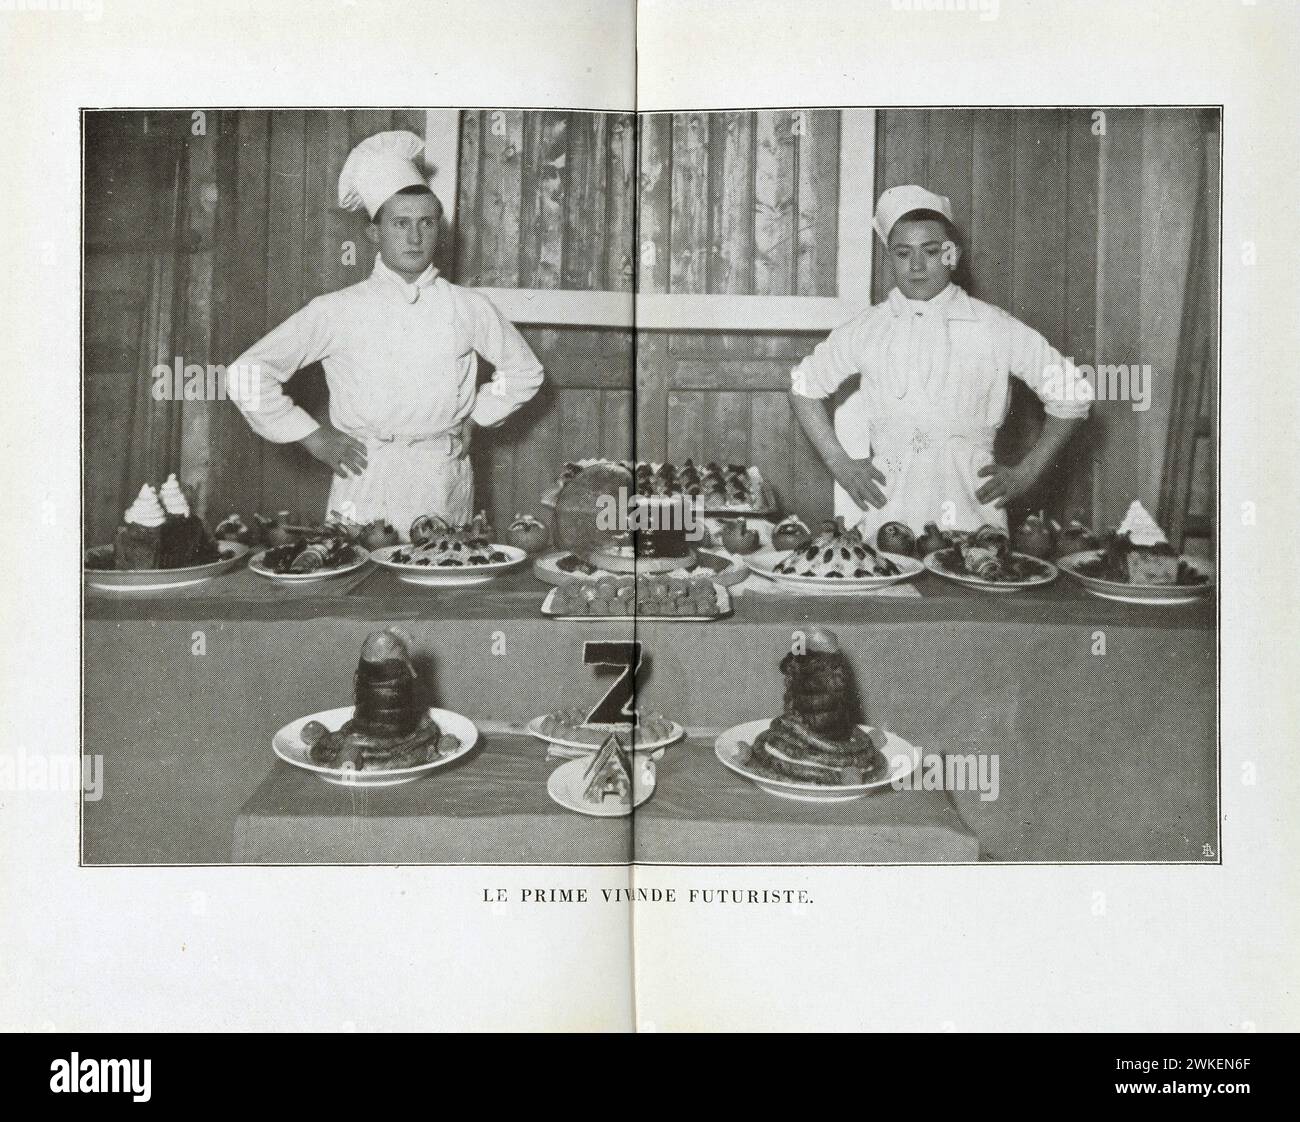 La cucina futurista. Museum: Privatsammlung. Author: Fillia (Luigi Colombo). Stock Photo